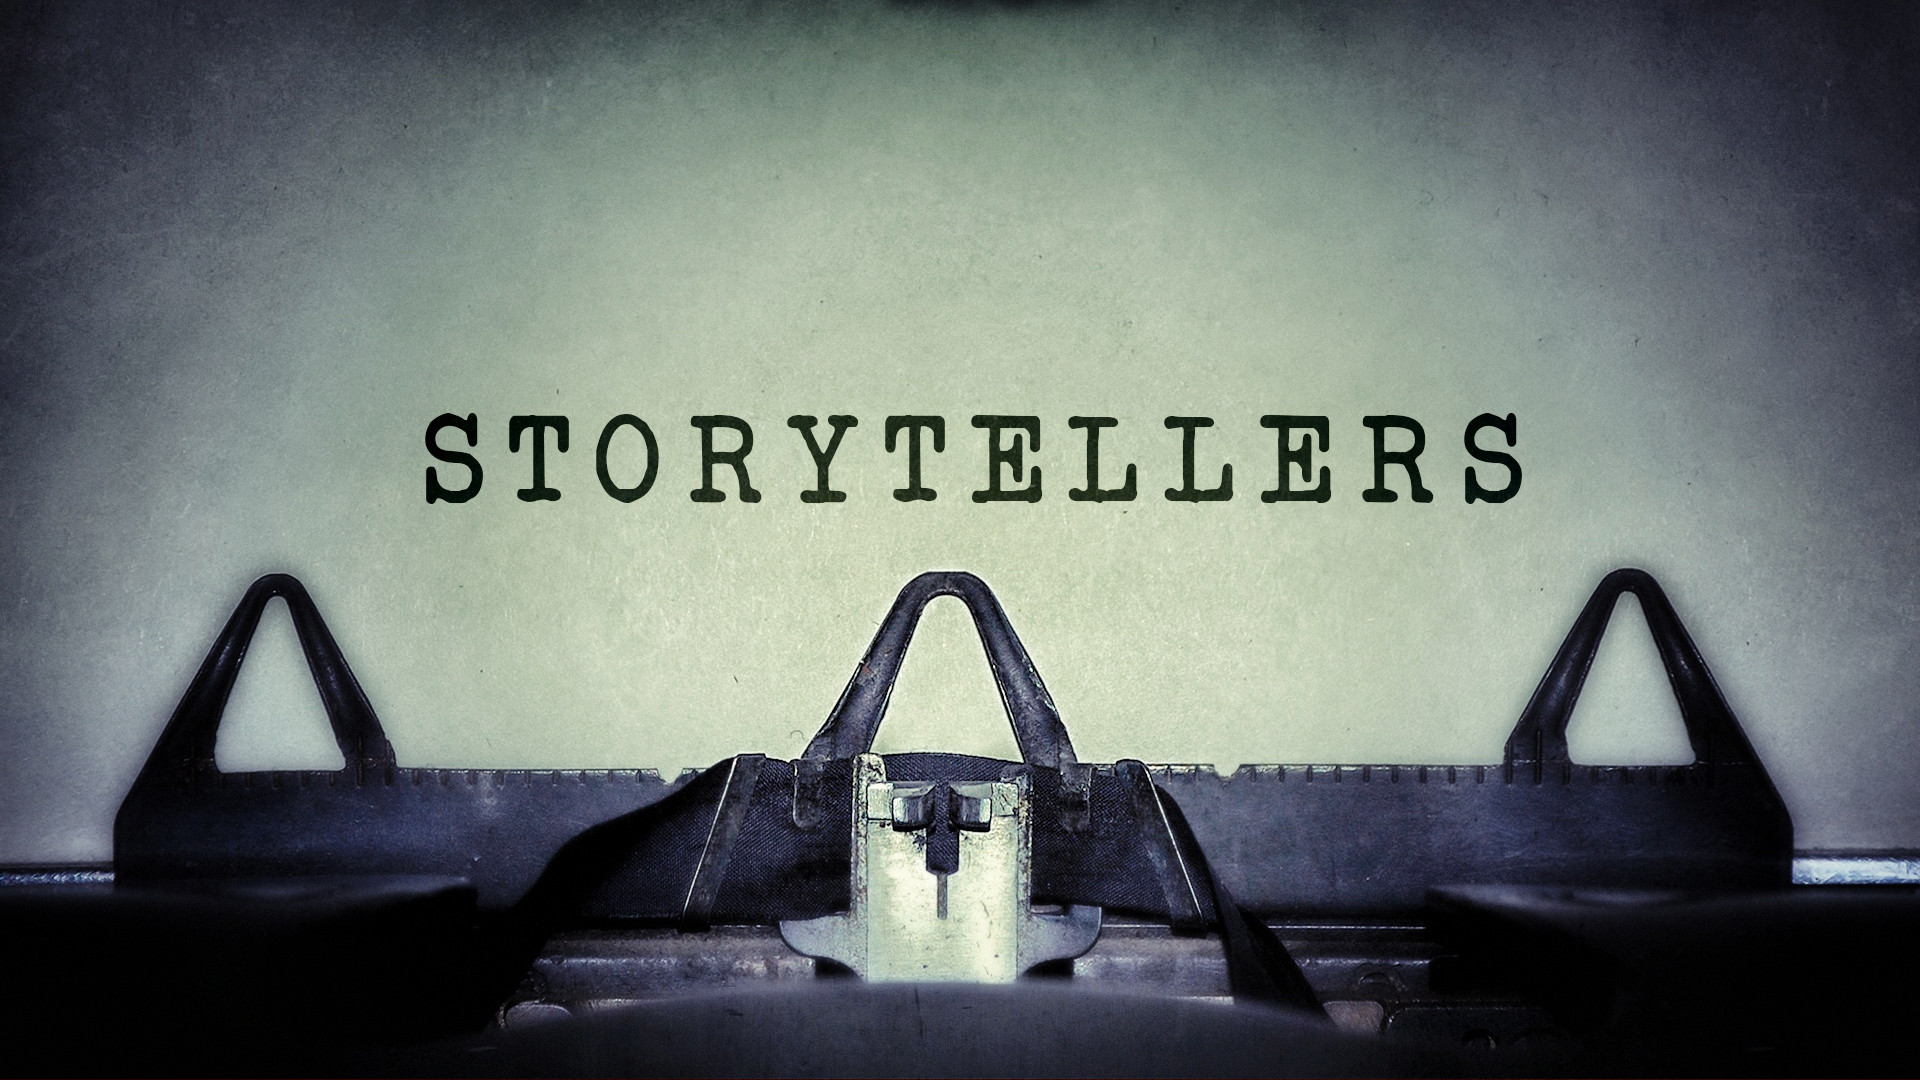 1920x1080 STORYTELLERS - A film has three directors